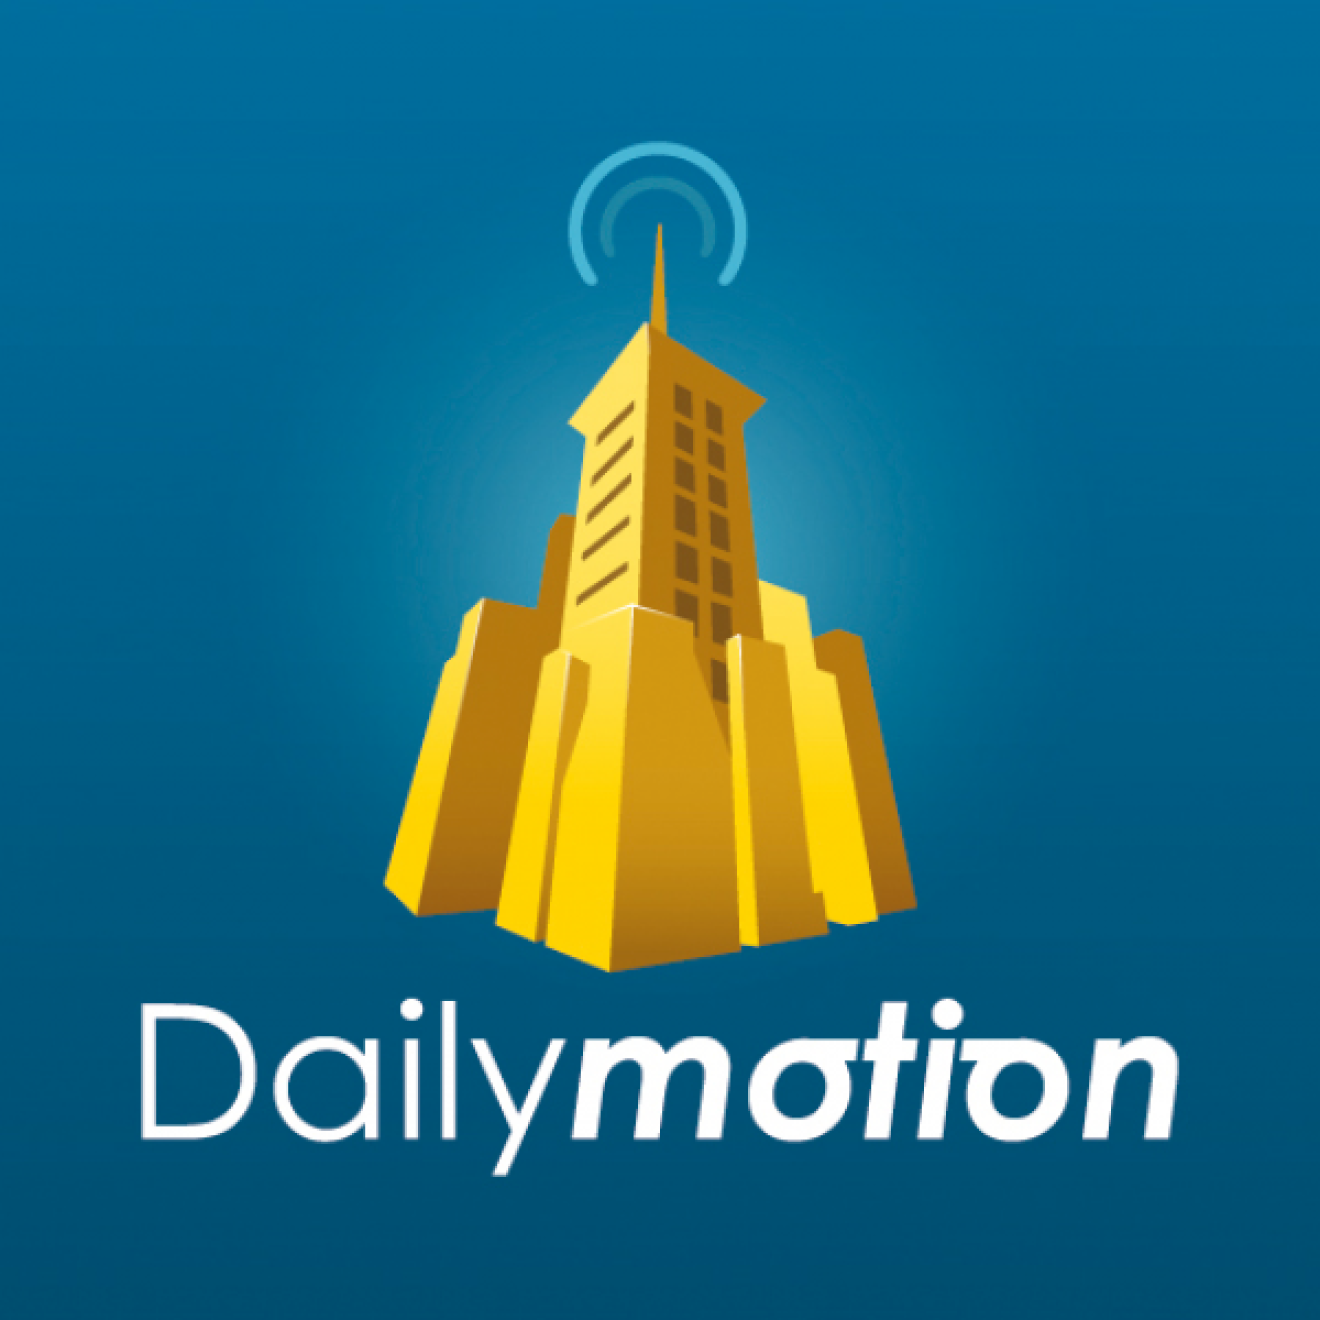 10000 Dailymotion Views / Aufrufe für Dich